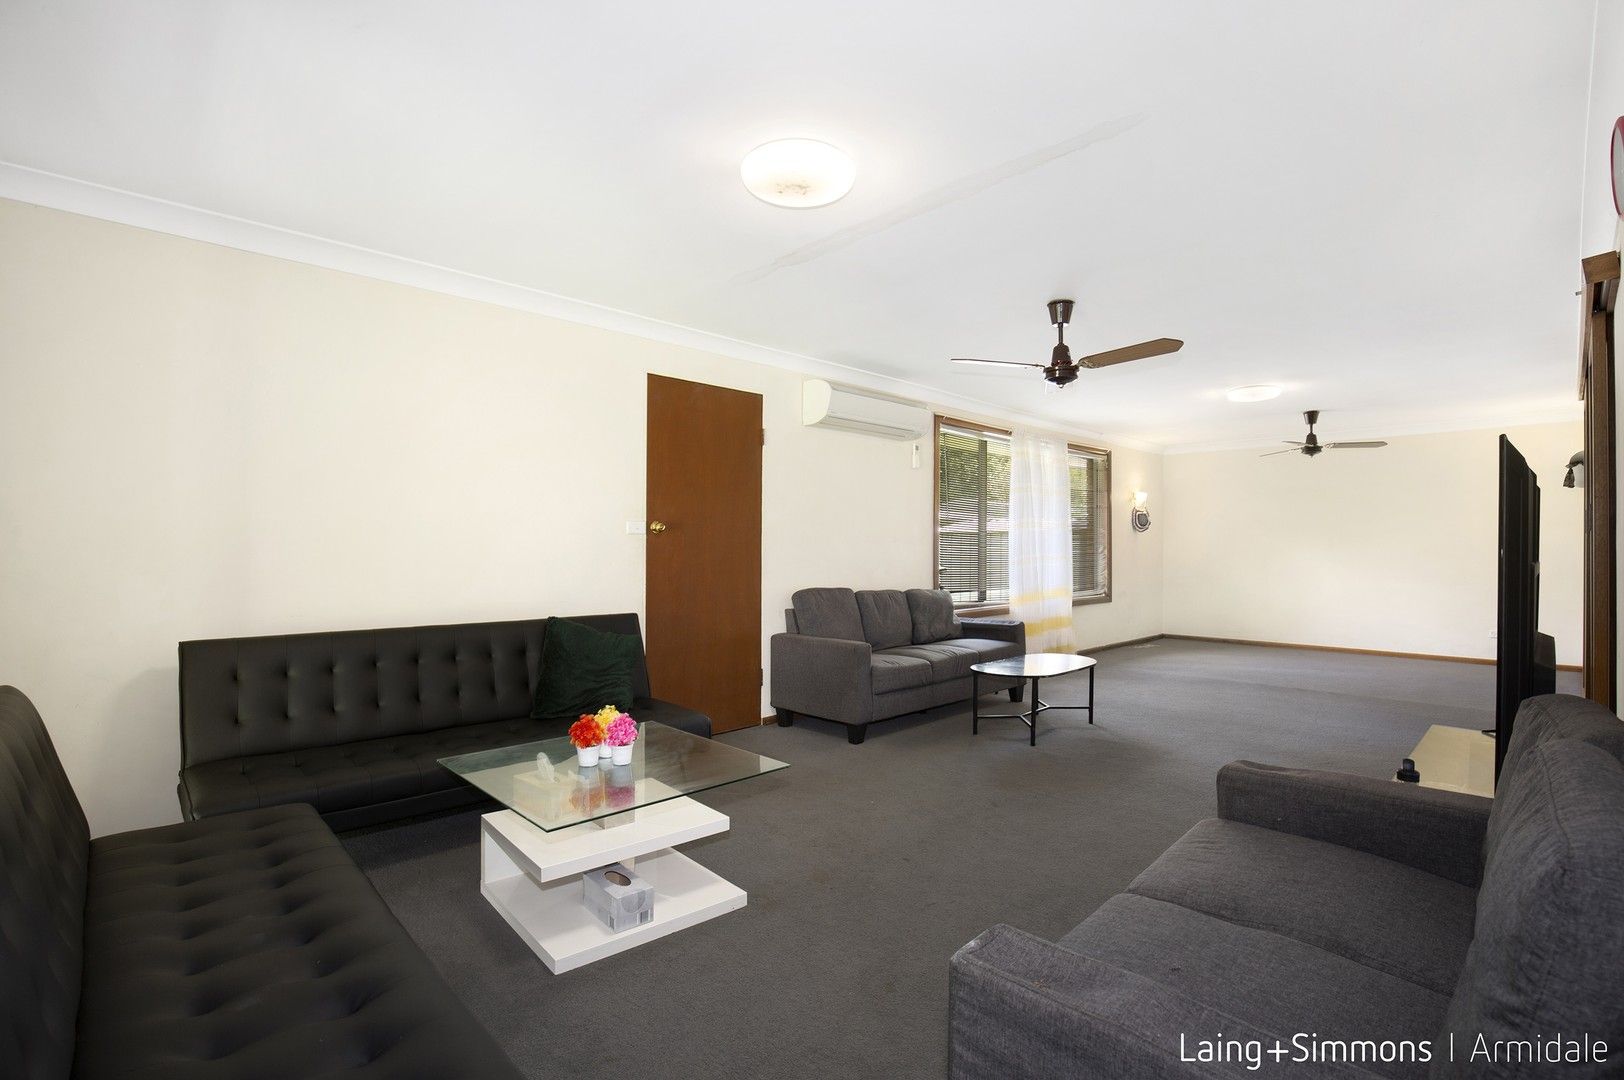 2 bedrooms House in 181 Barney Street ARMIDALE NSW, 2350